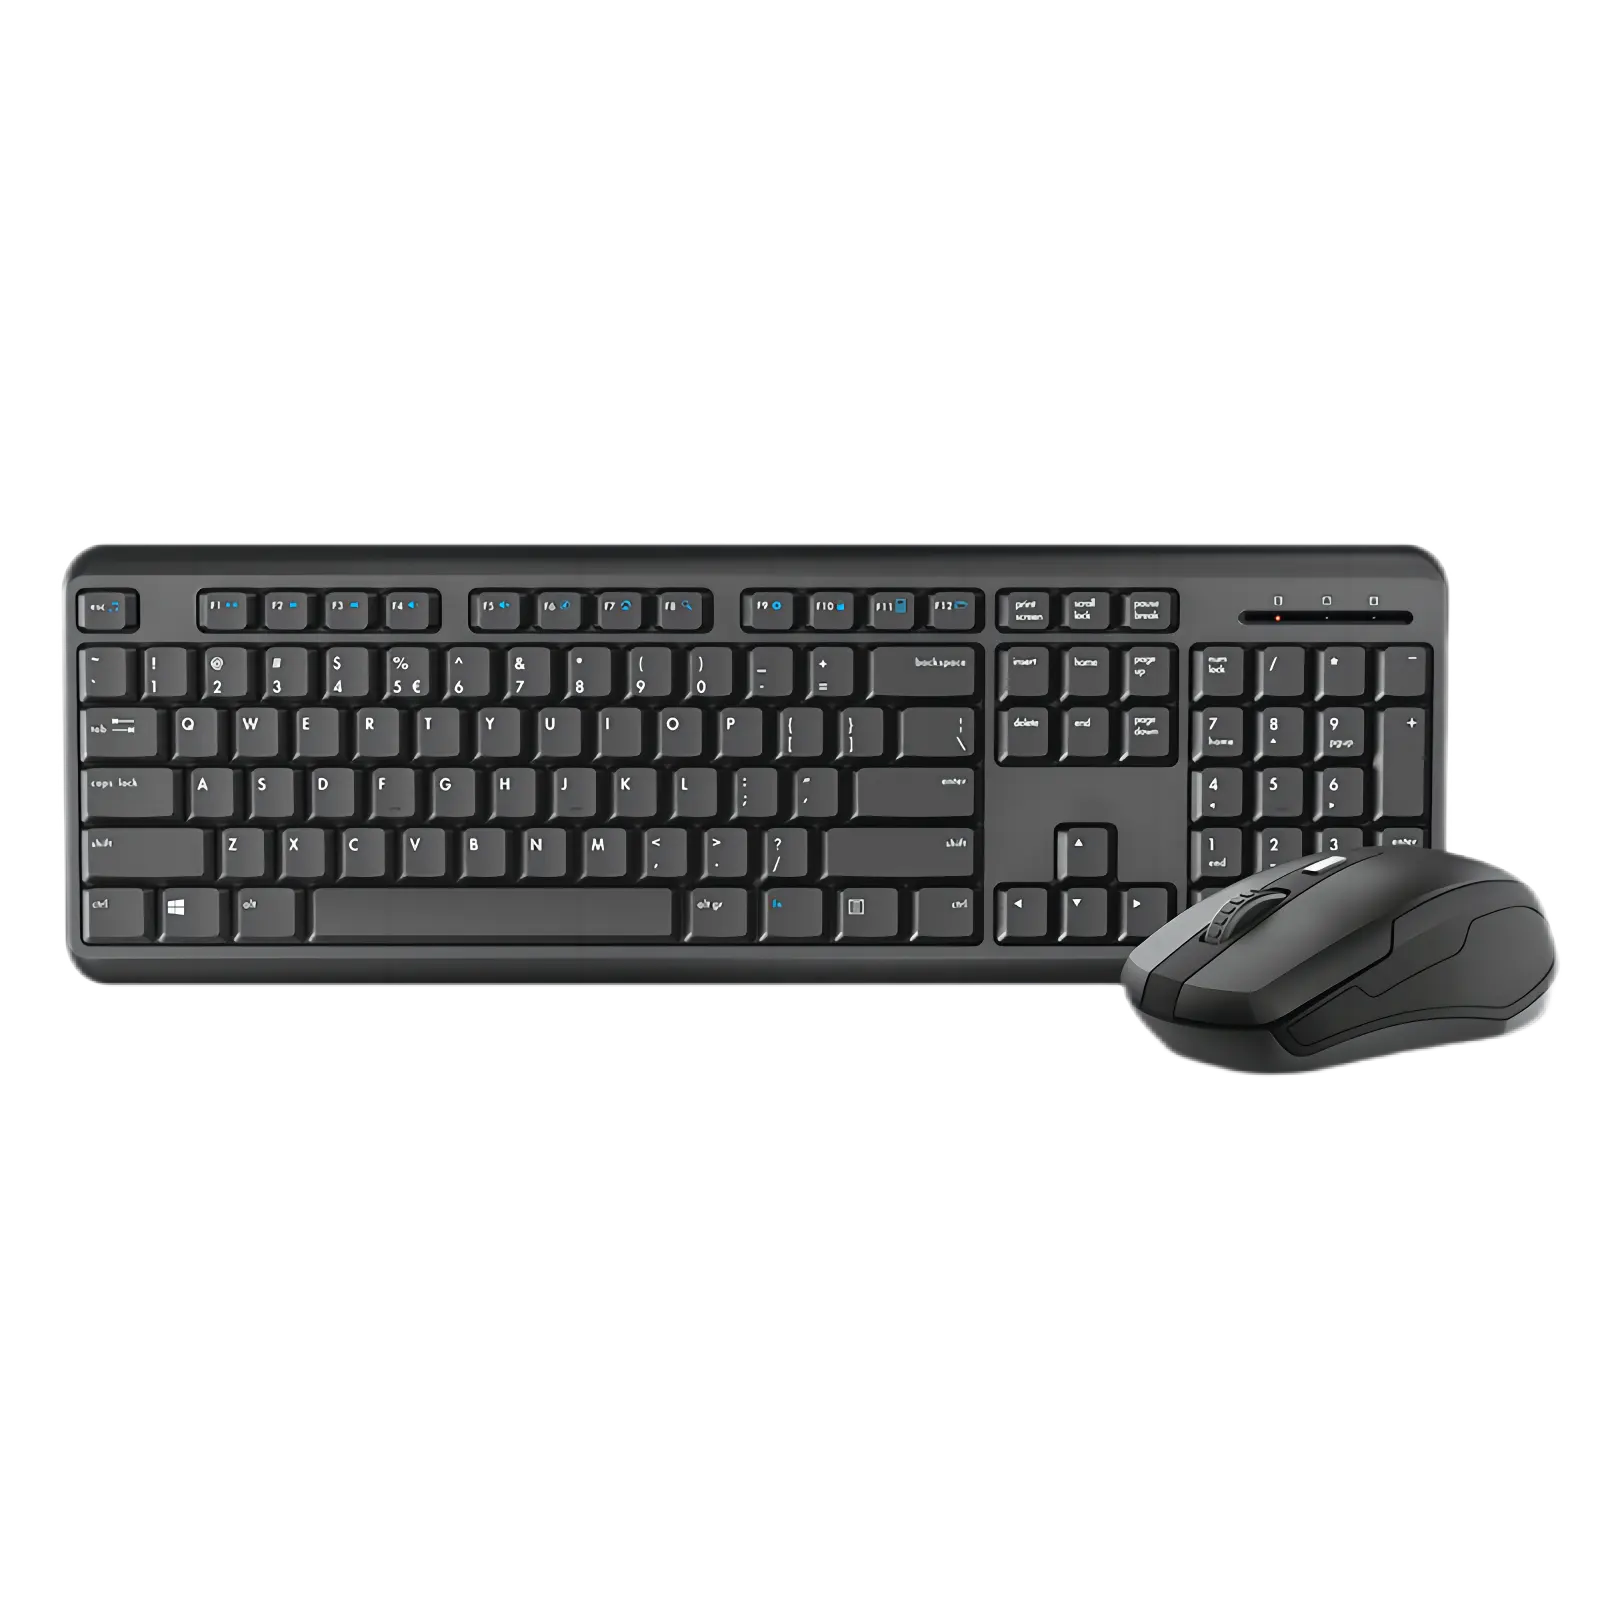 Wireless Keyboard and Mouse Combo - Standard full size Office Keyboard Responsive & Low noise Keys, Tilt Angle, Sleep mode